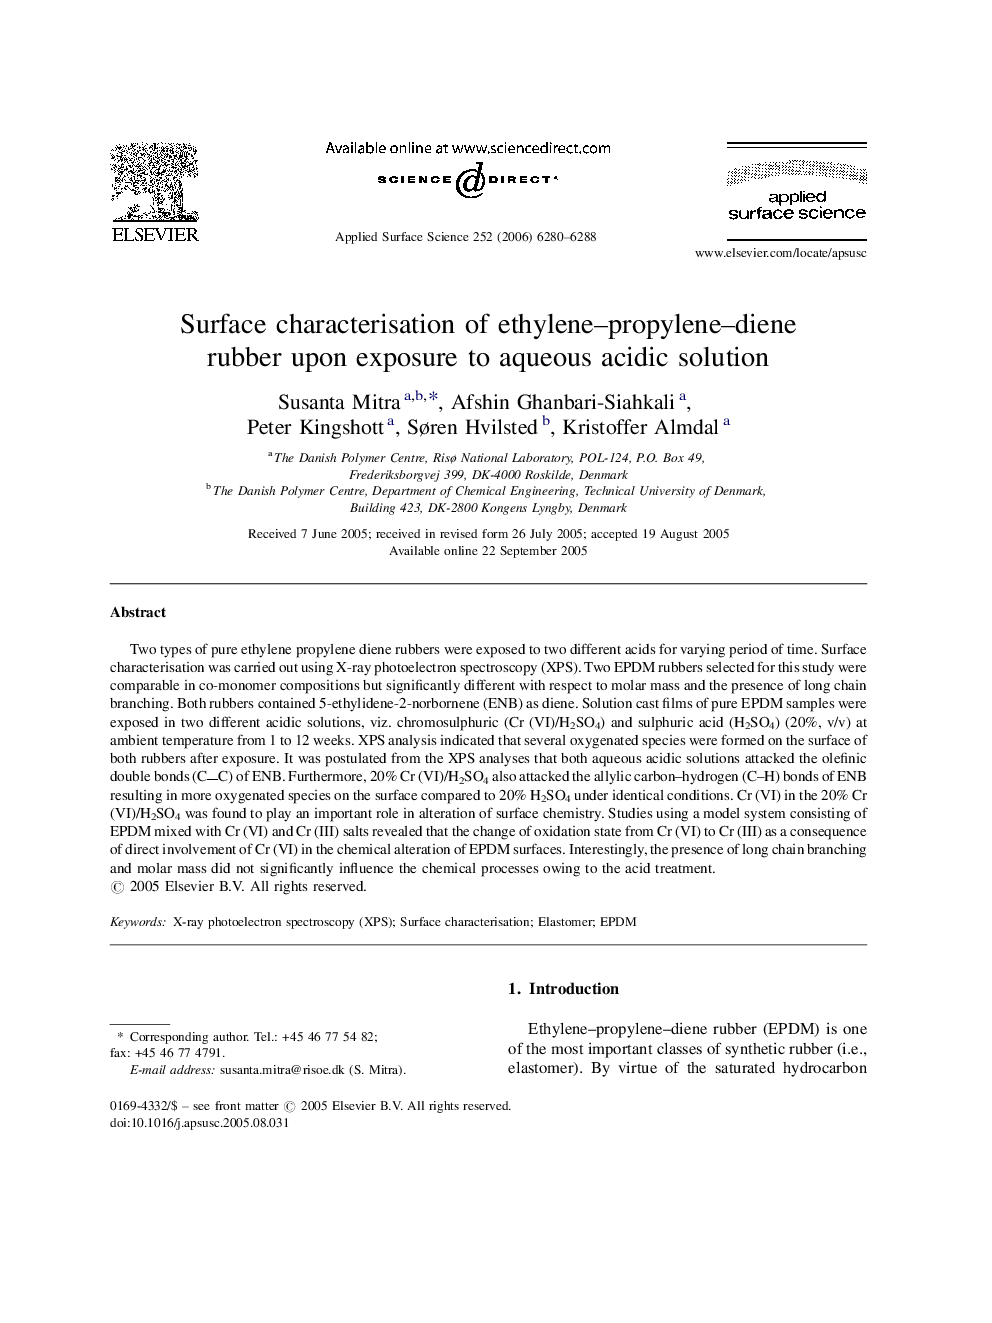 Surface characterisation of ethylene-propylene-diene rubber upon exposure to aqueous acidic solution